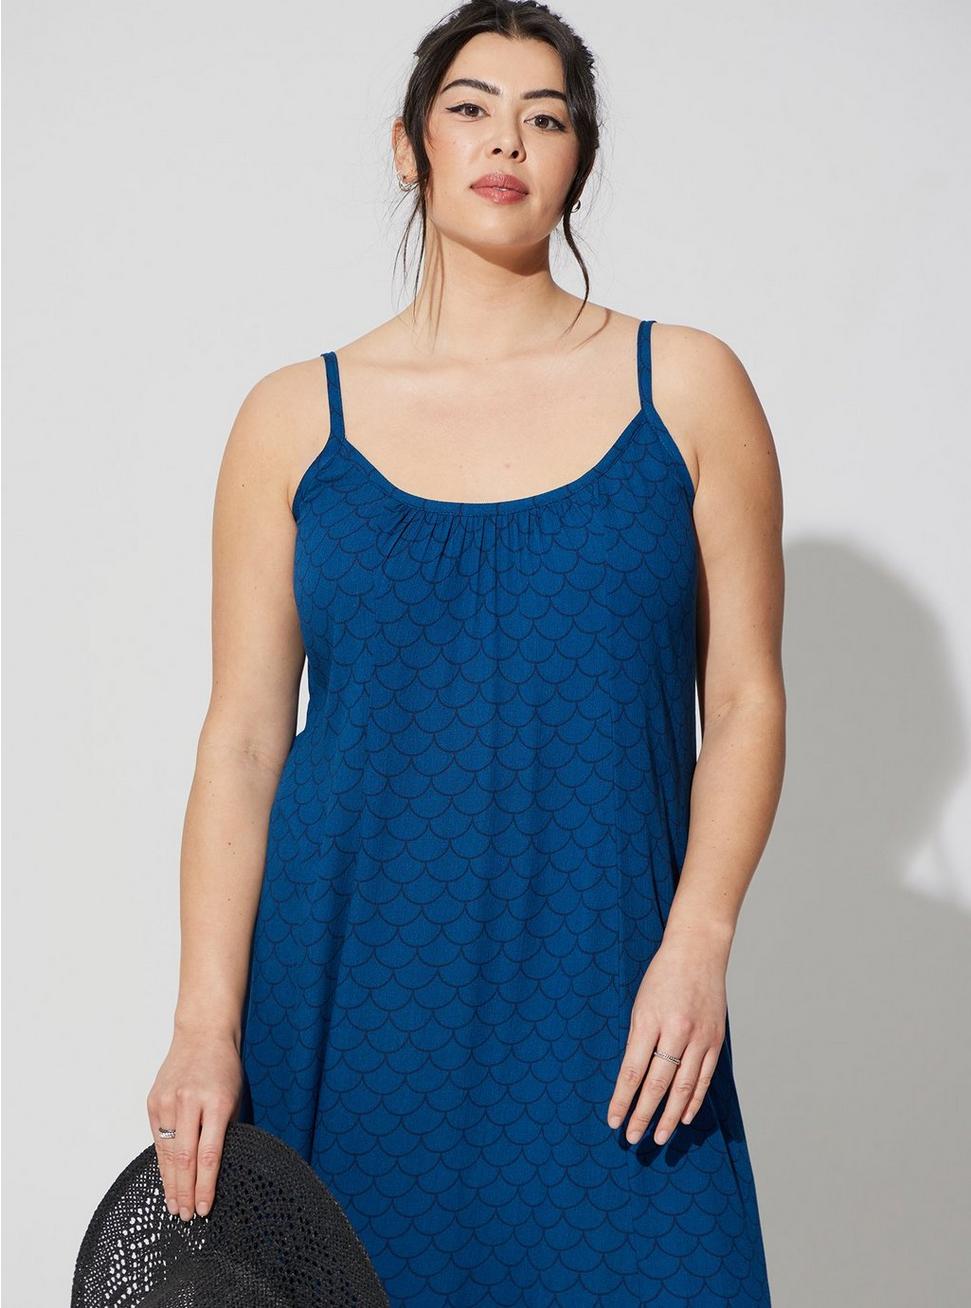 Maxi Gauze Beach Dress, MERMAID SCALES-BLUE, alternate